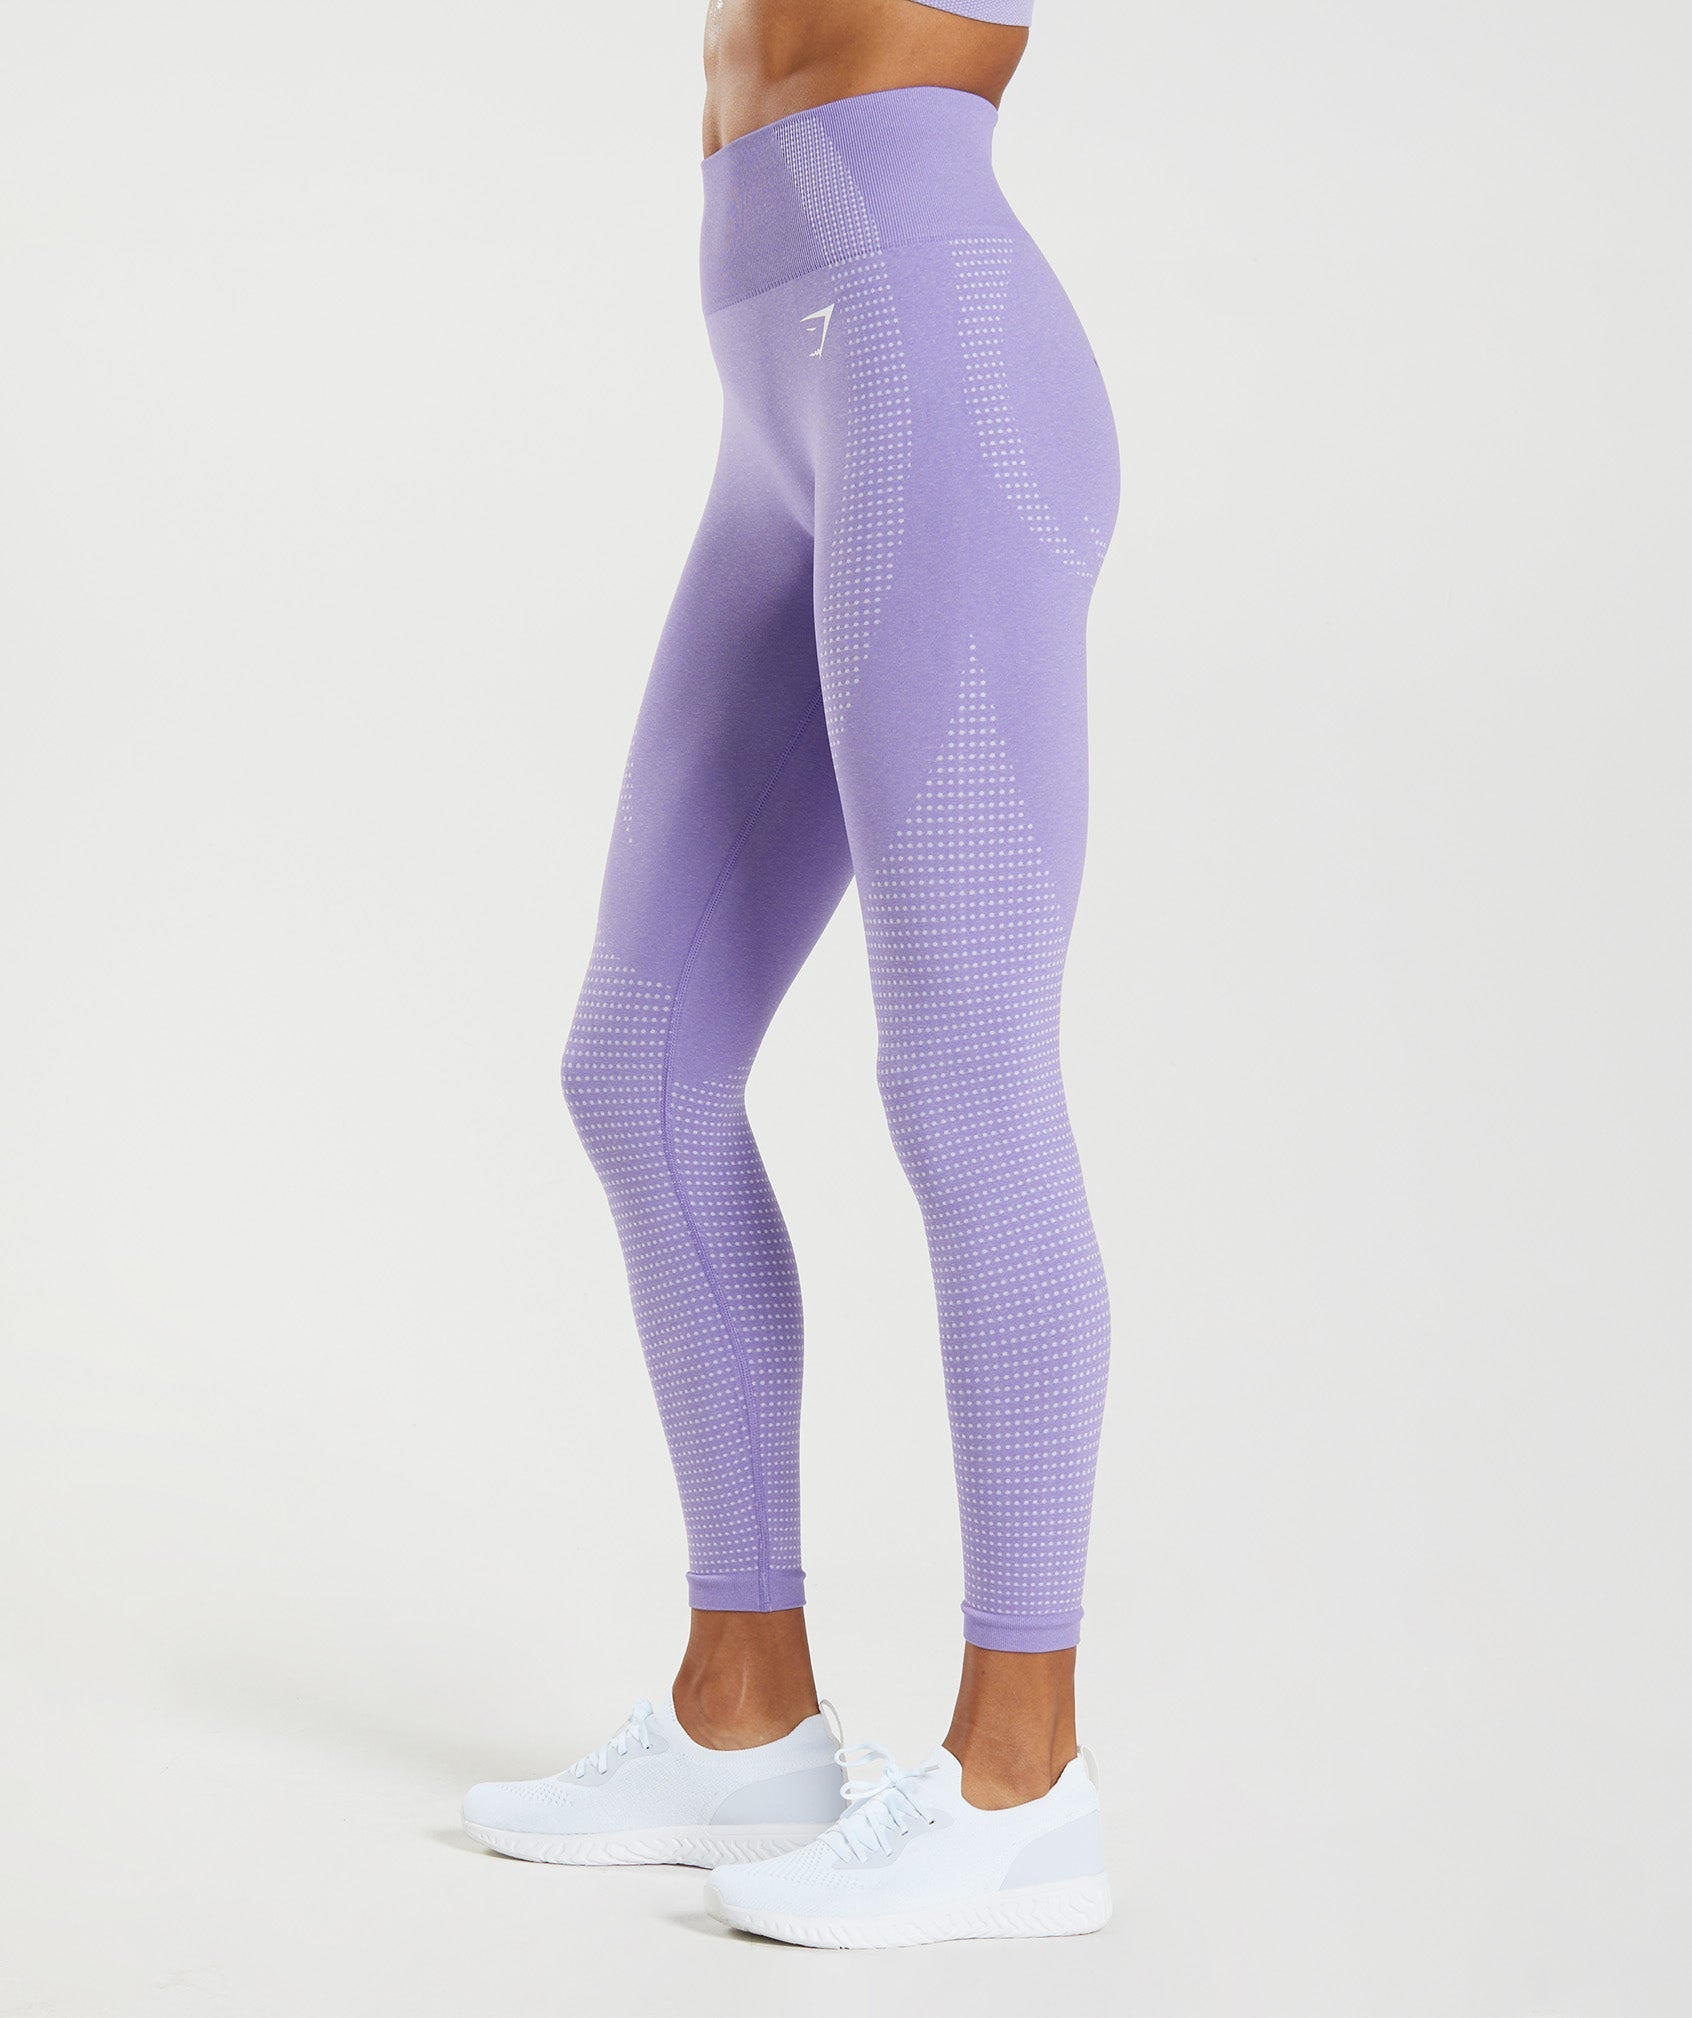 GYMSHARK Women's Essentials Graphic Leggings, Tights, purple, XS : :  Fashion